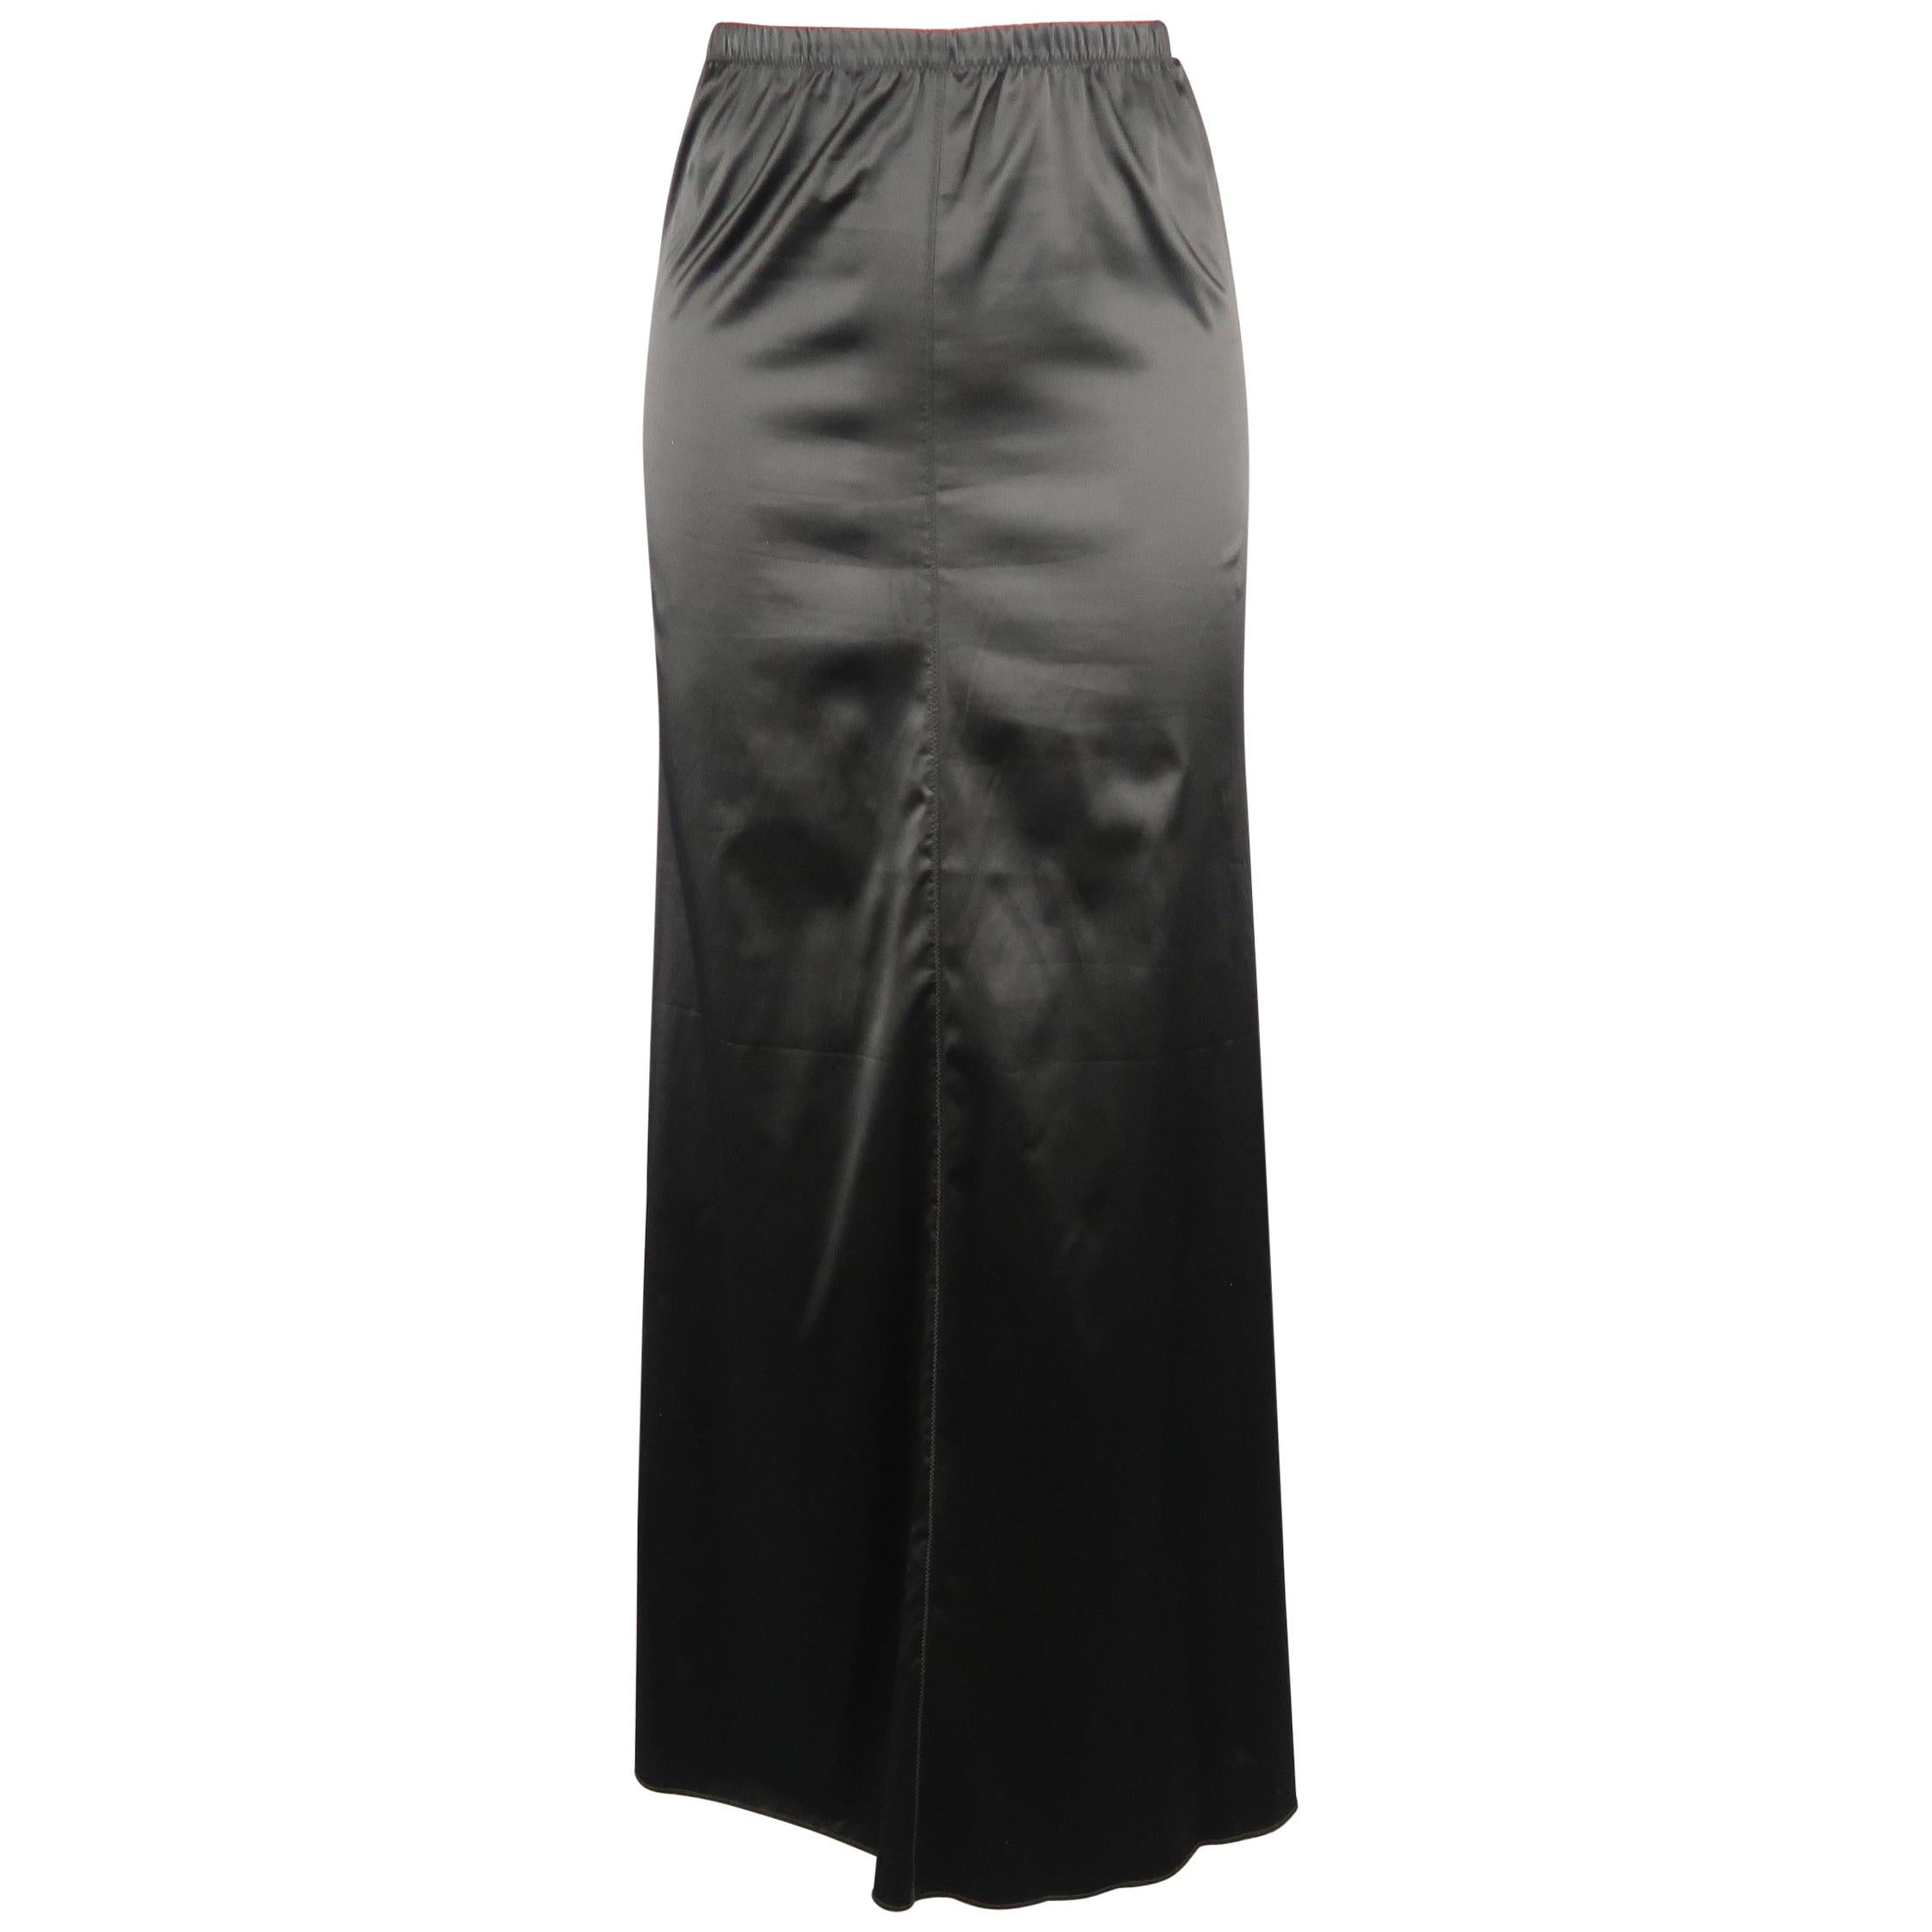 JEAN PAUL GAULTIER Size S Black Lame A Line Maxi Skirt